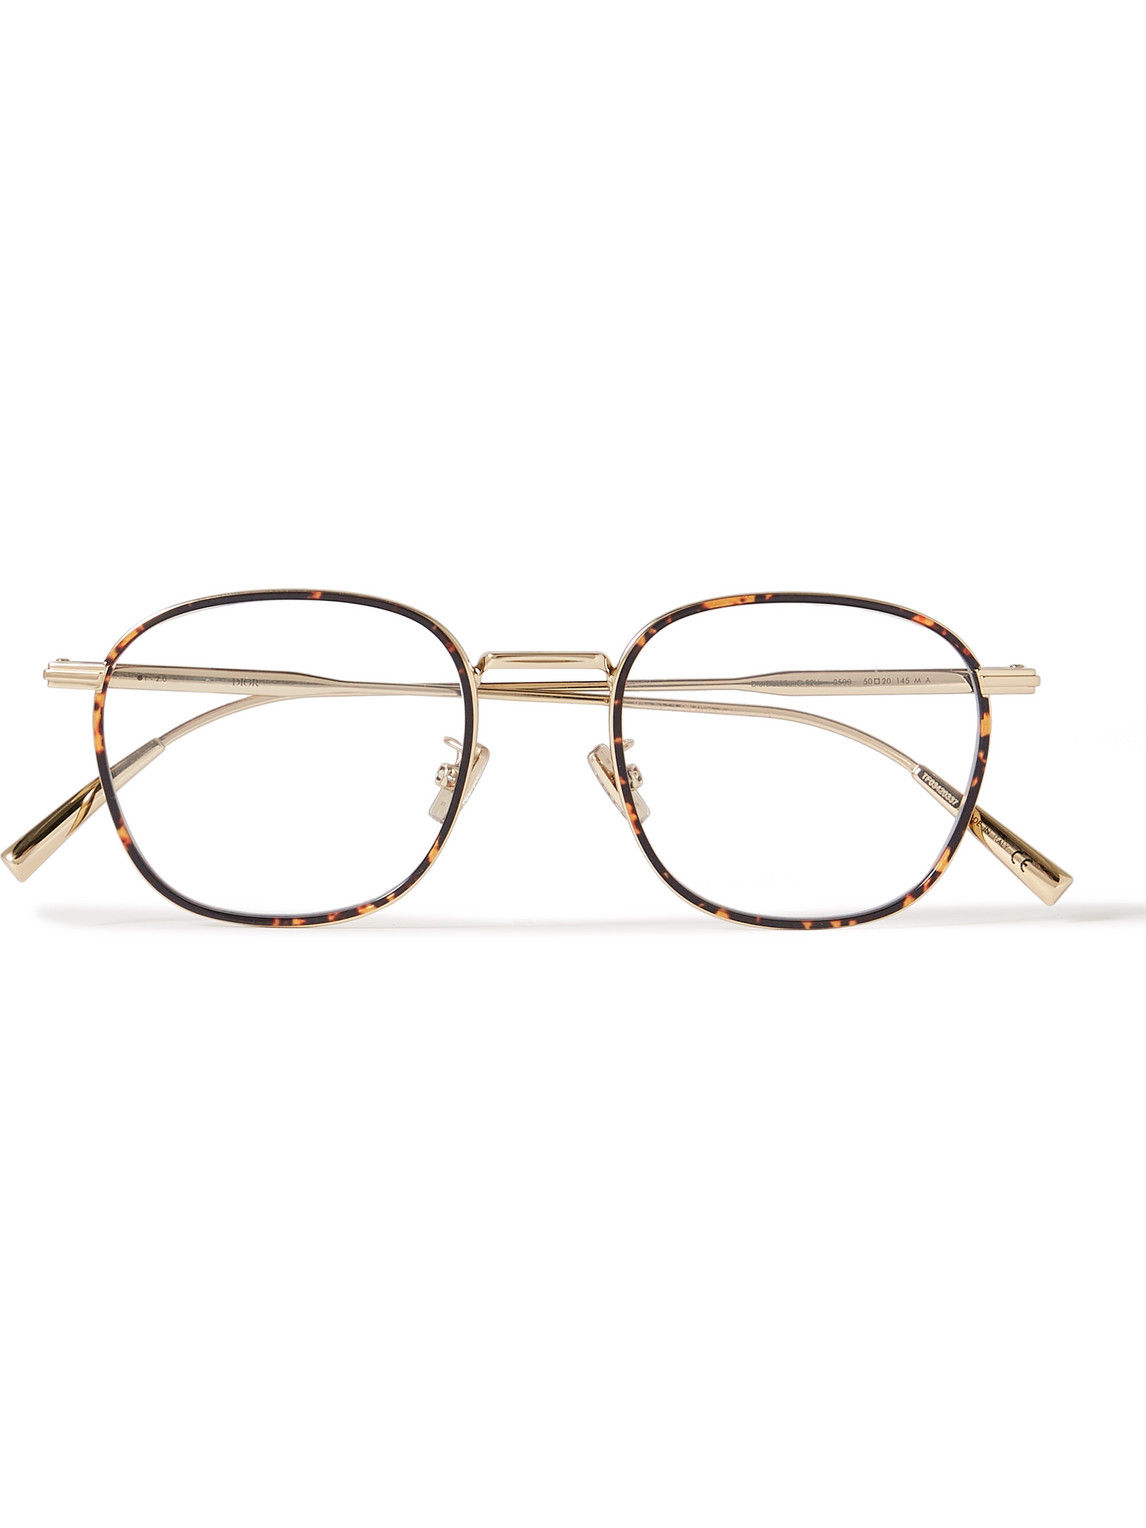 DiorBlackSuitO S2U Round-Frame Tortoiseshell Acetate and Gold-Tone Optical Glasses